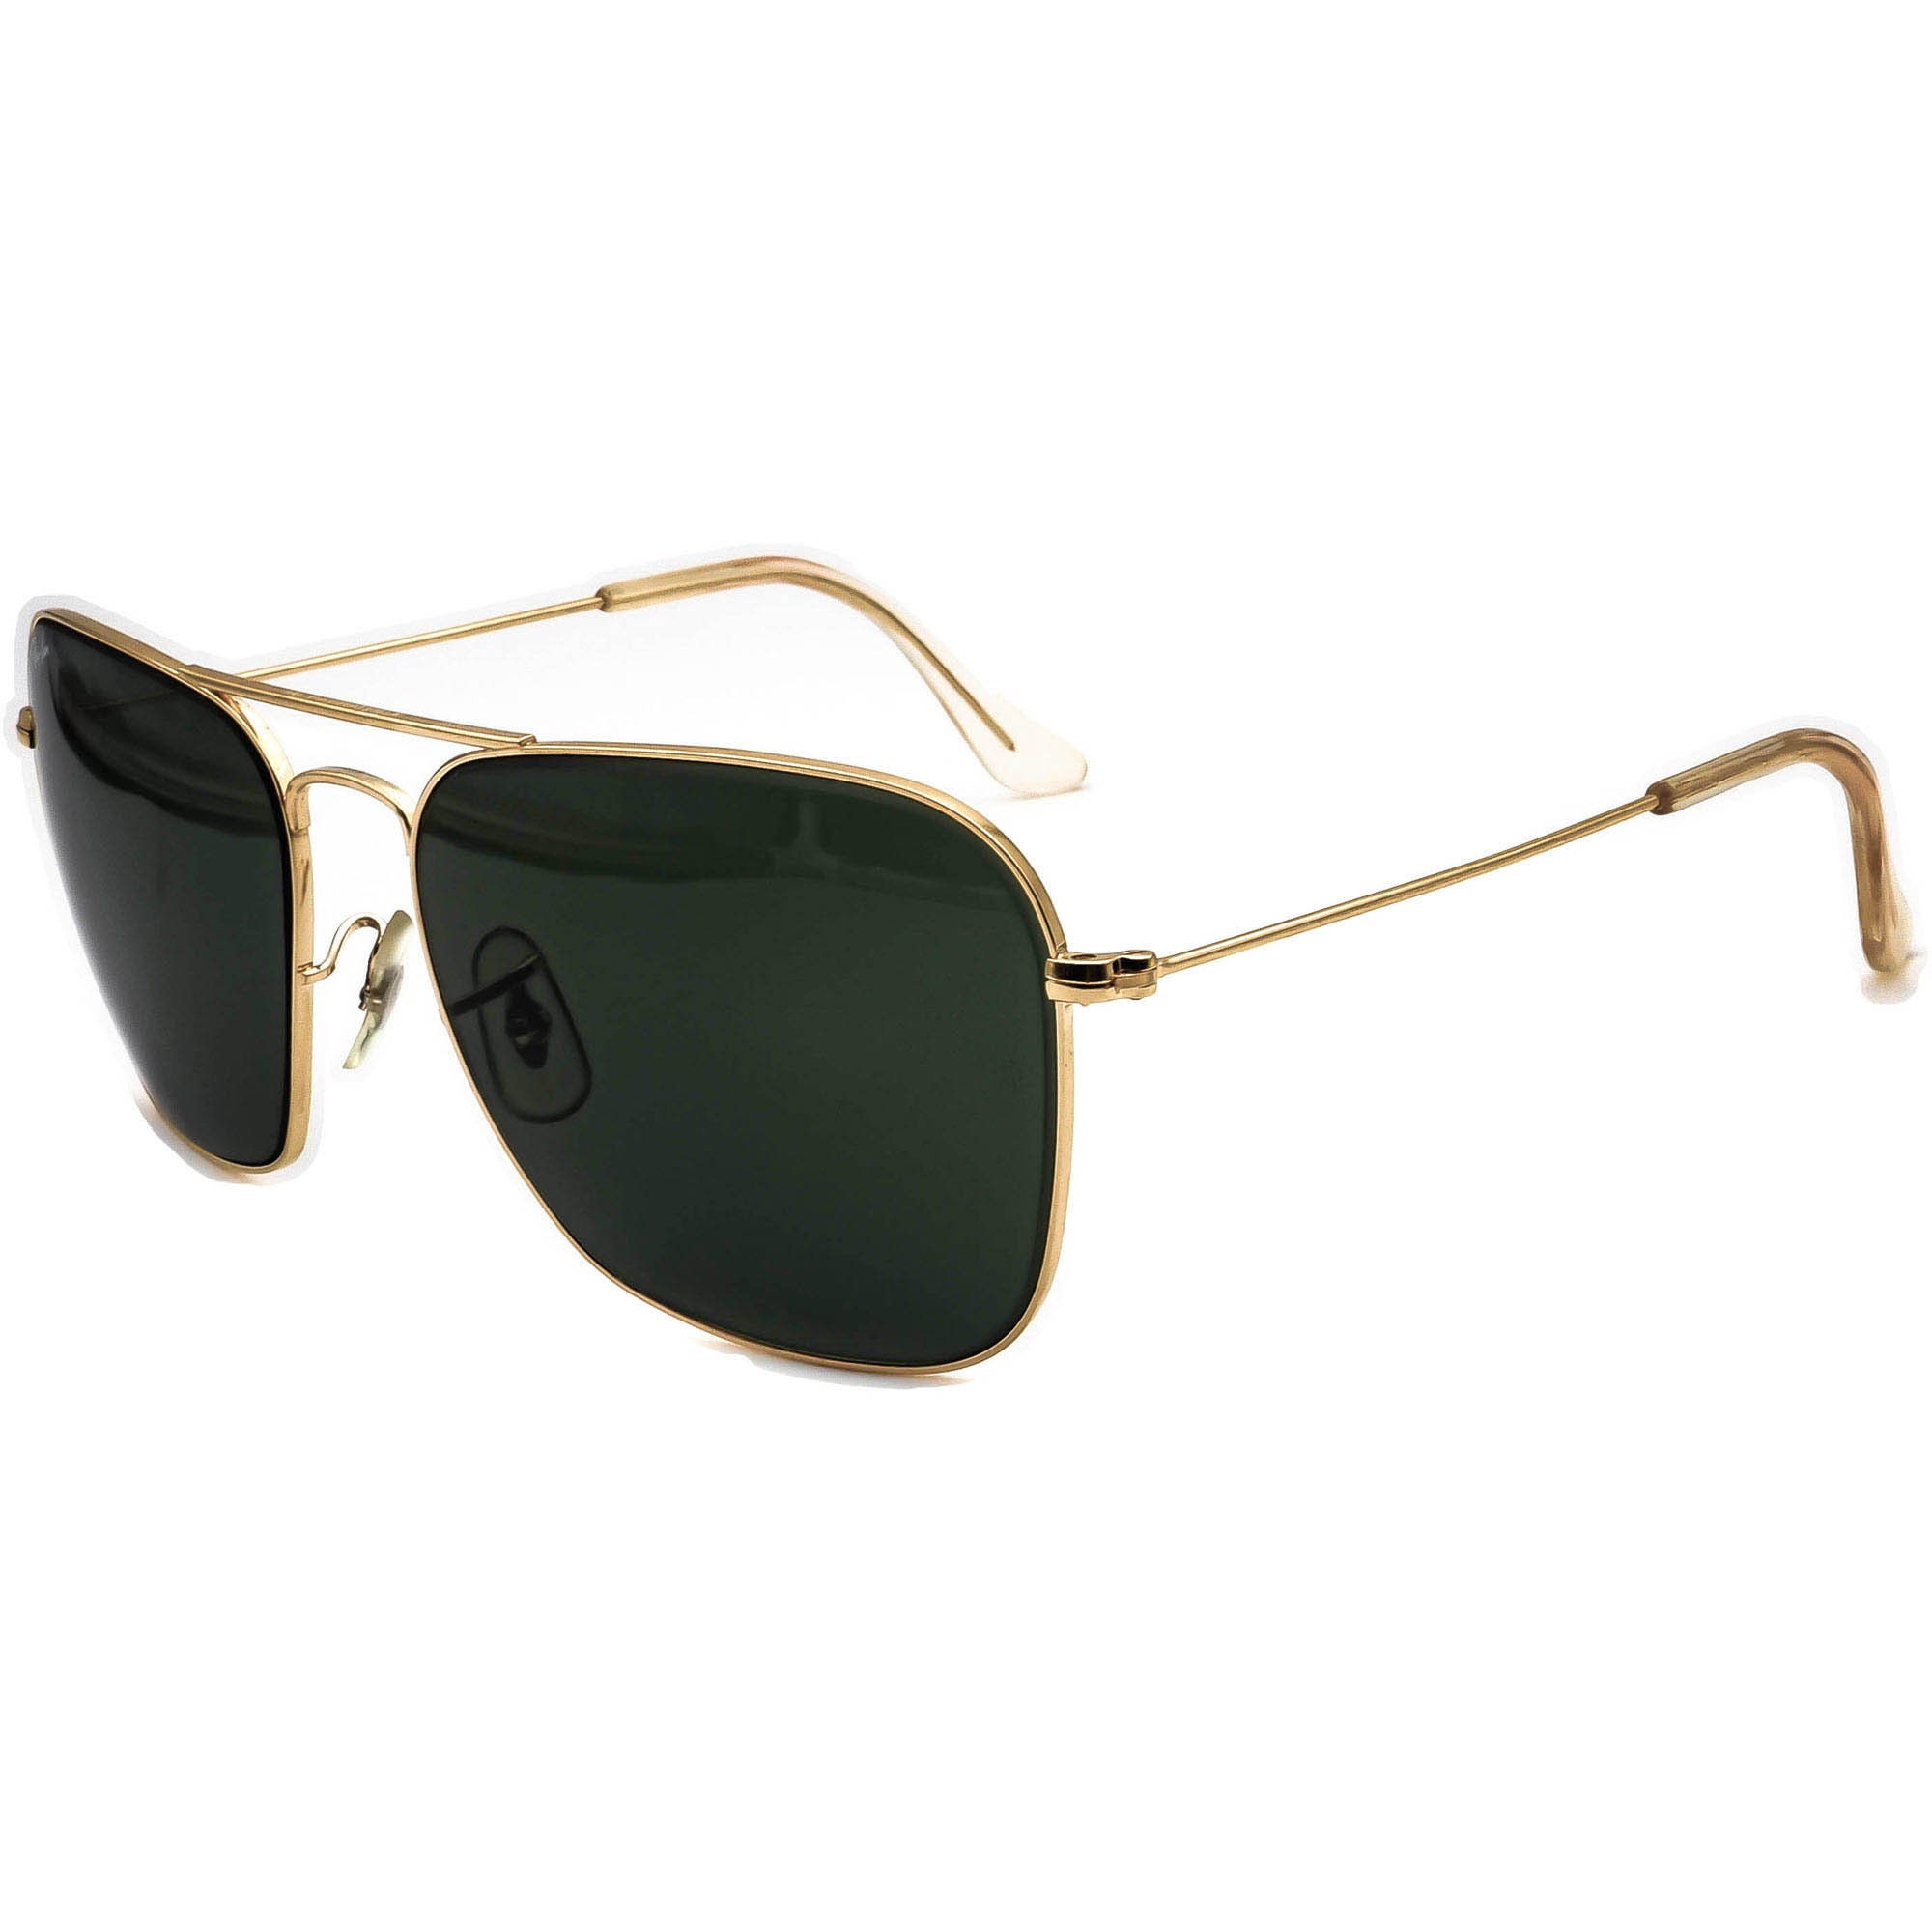 Ray-ban B&L Vintage Sunglasses Caravan Gold Pilot Metal 58 | Etsy